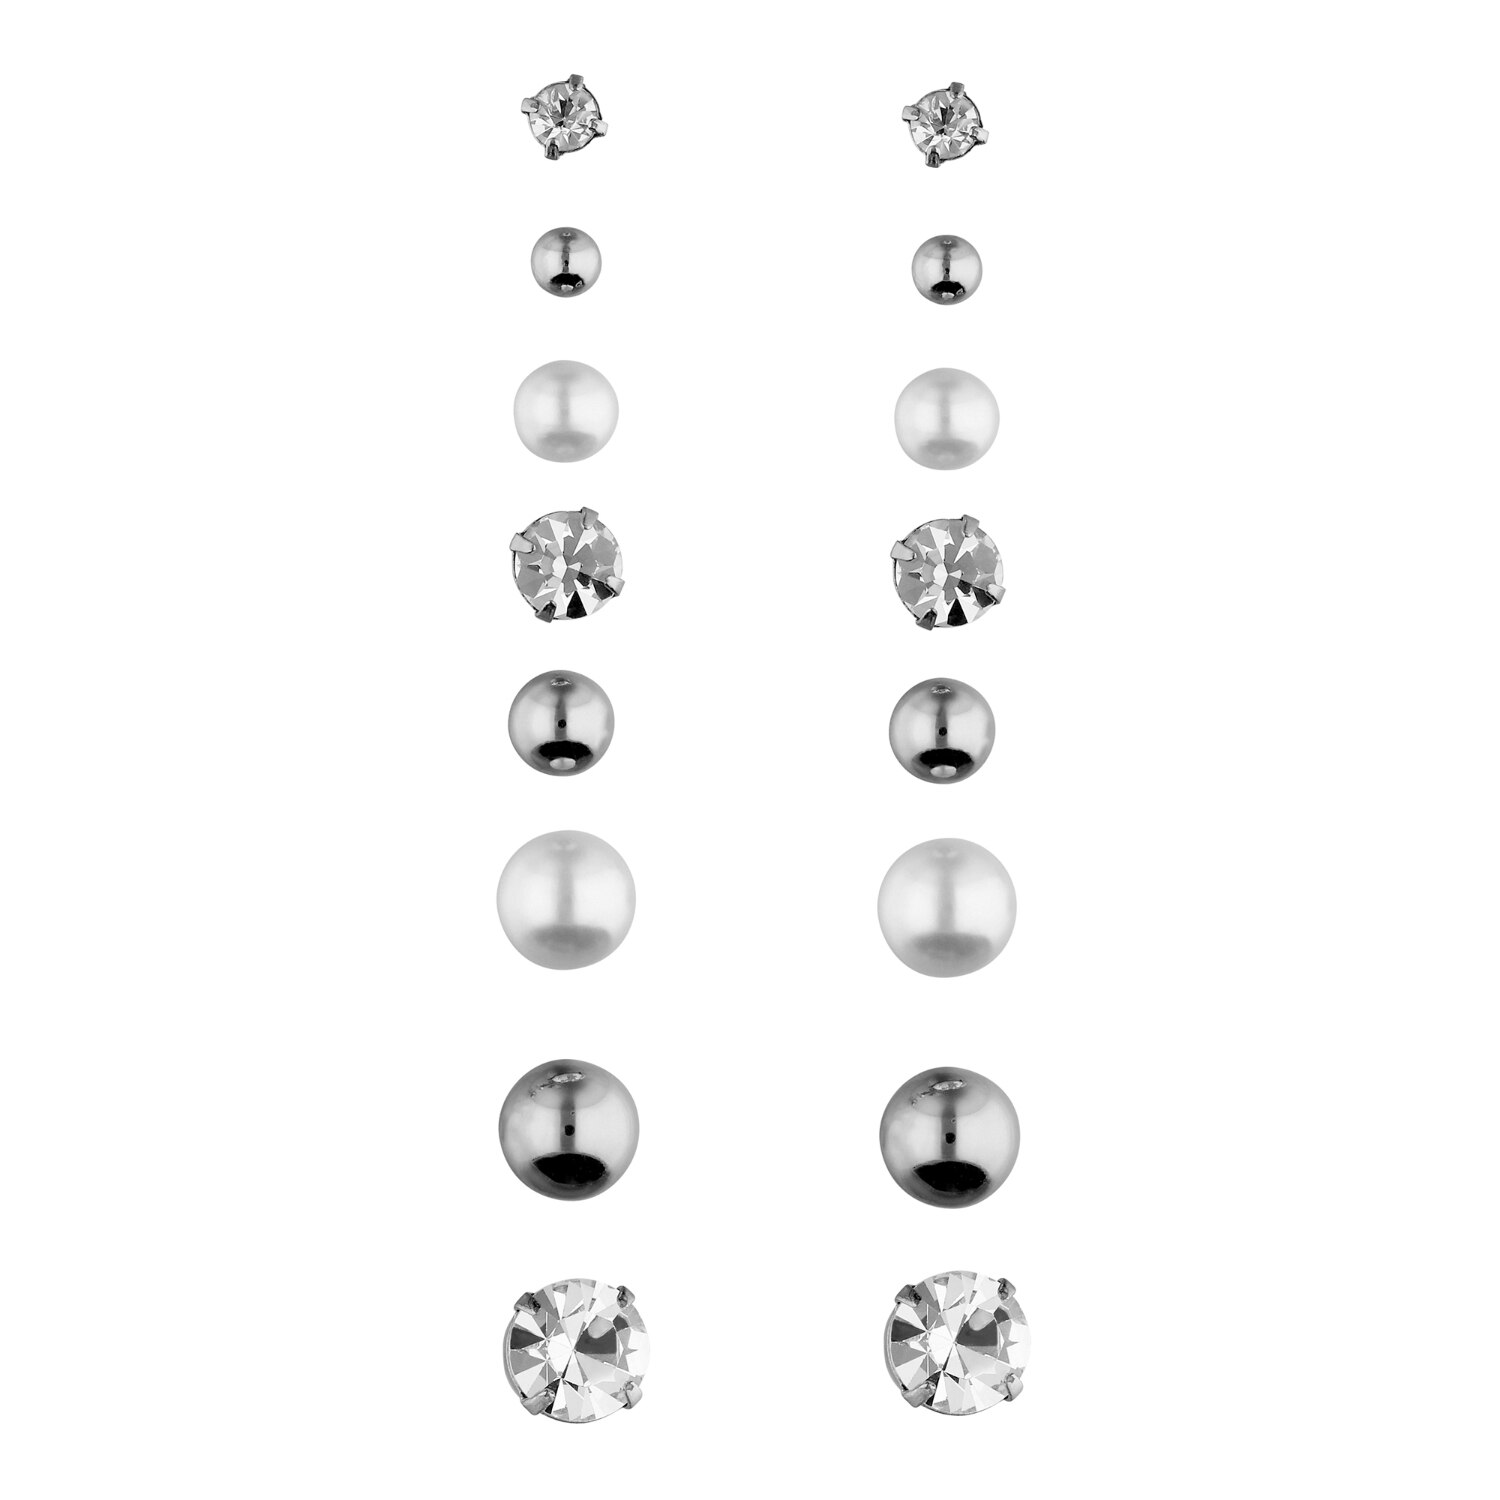 I AM Jewelry Earring Set, 16CT